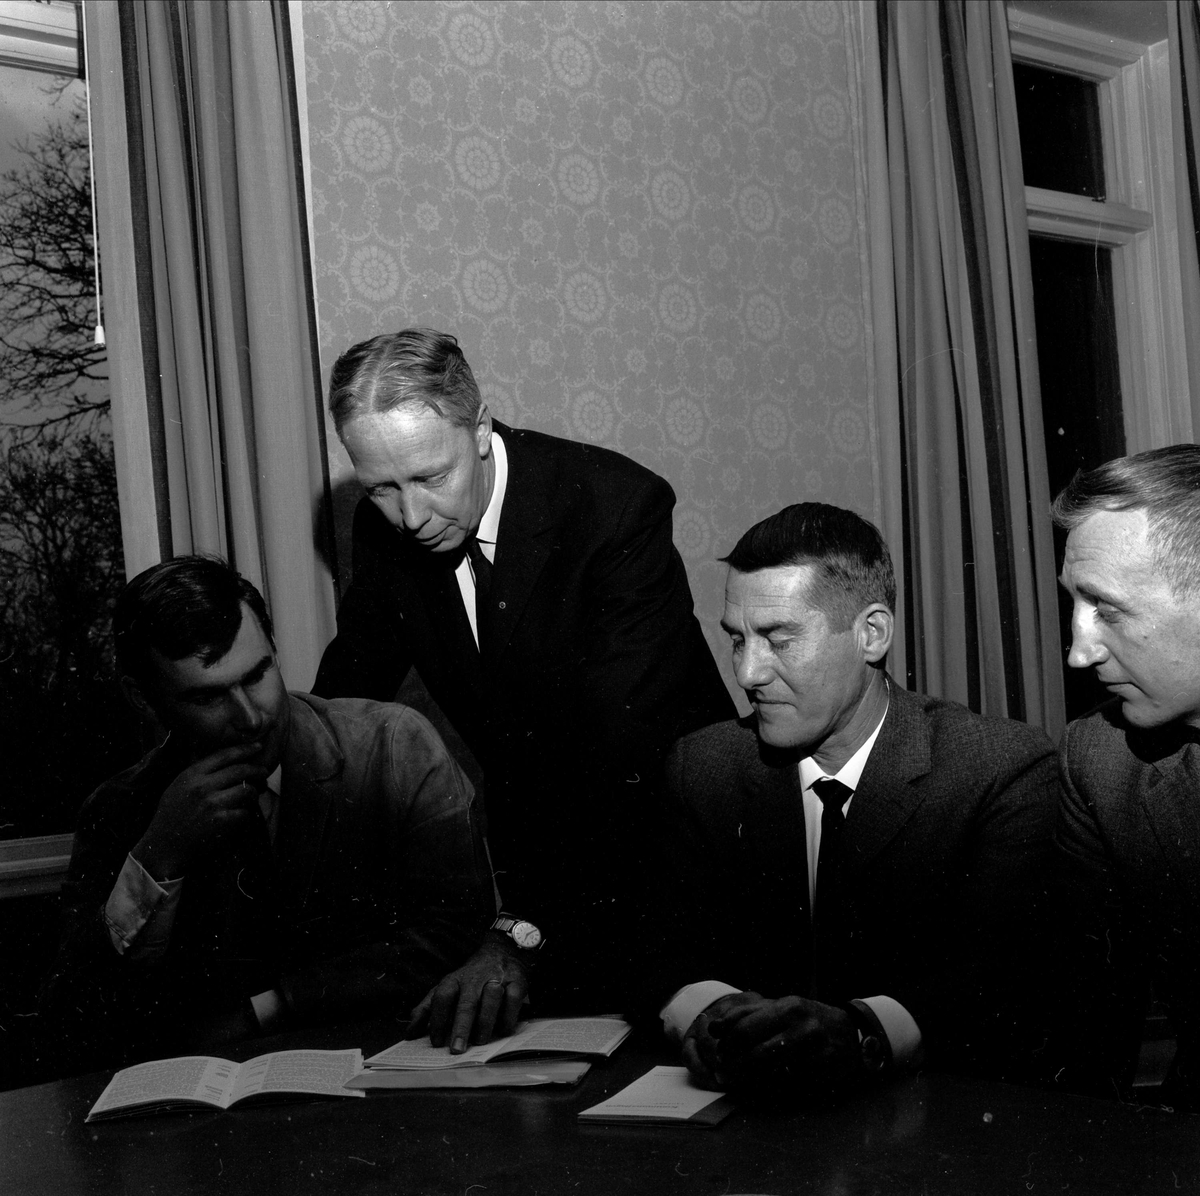 Män vid sammanträdesbord, sannolikt Tierps kommun, Uppland, 1967